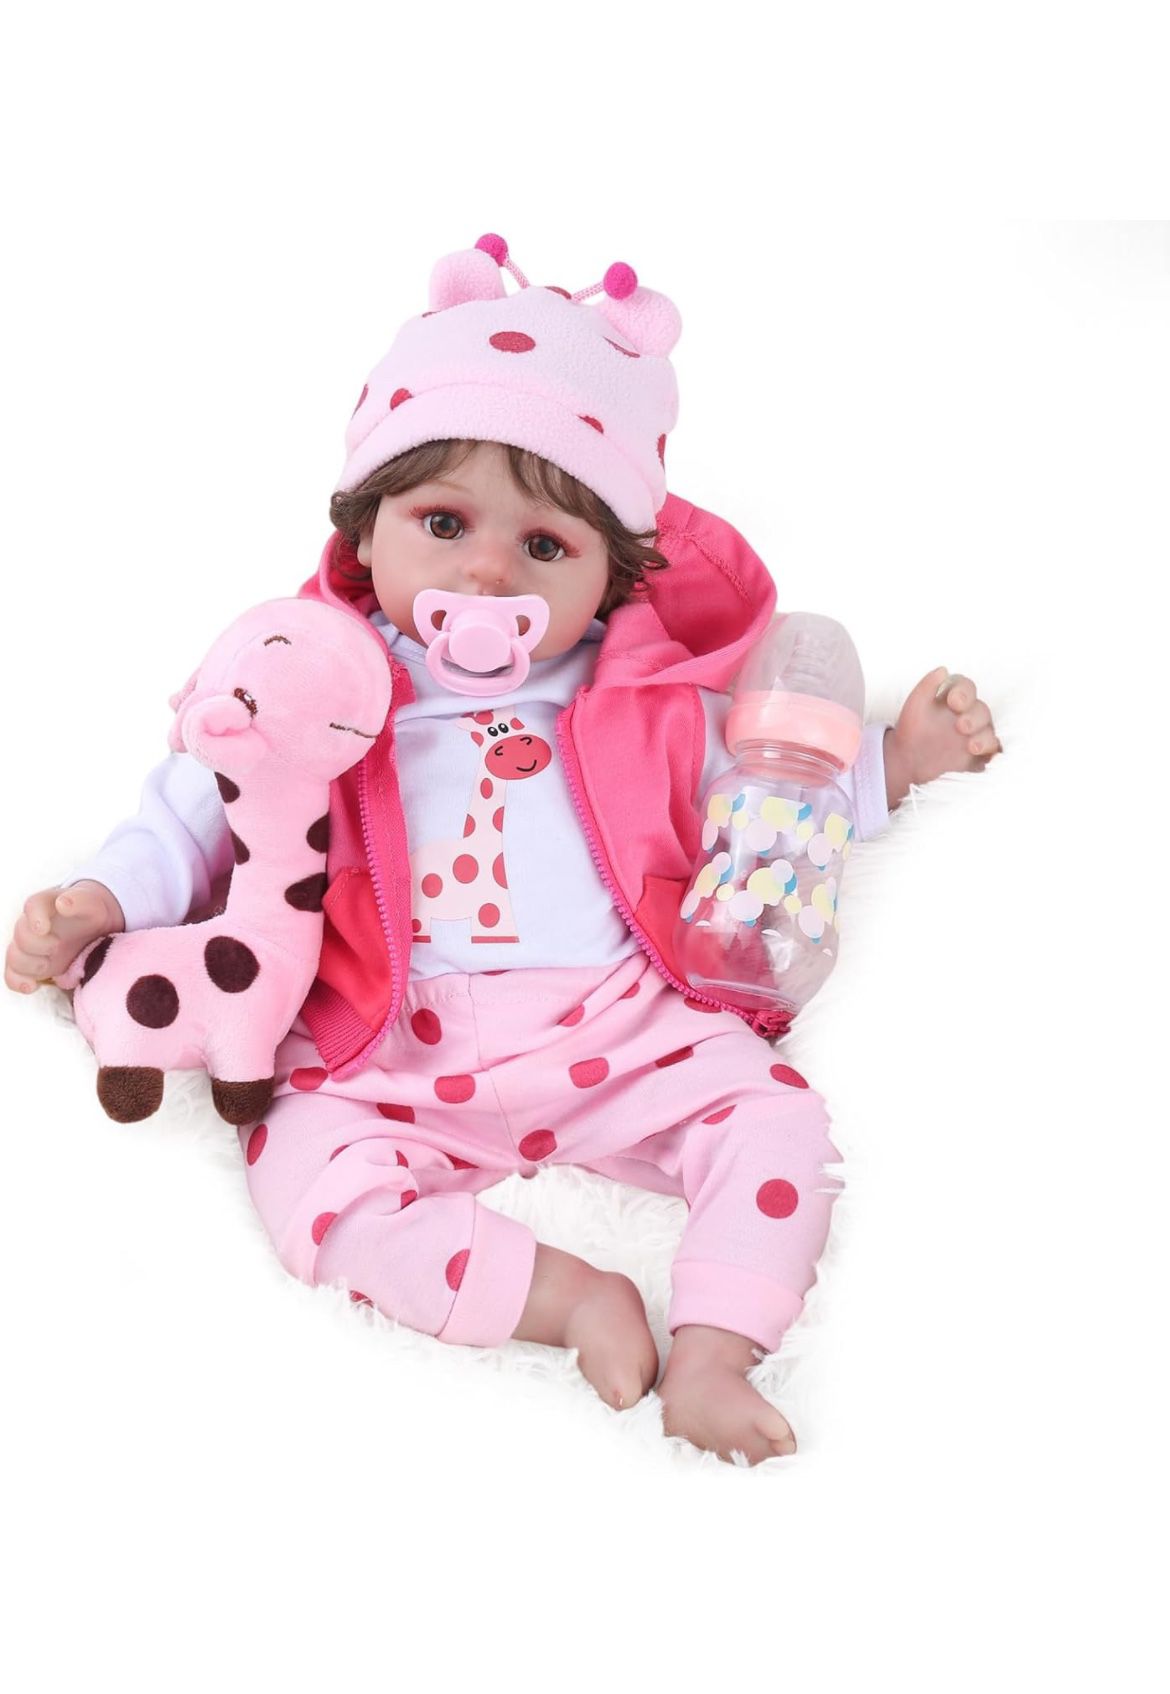 Reborn Realistic Newborn Baby Dolls, 18 inch Silicone Real Toddler Girl Lifelike